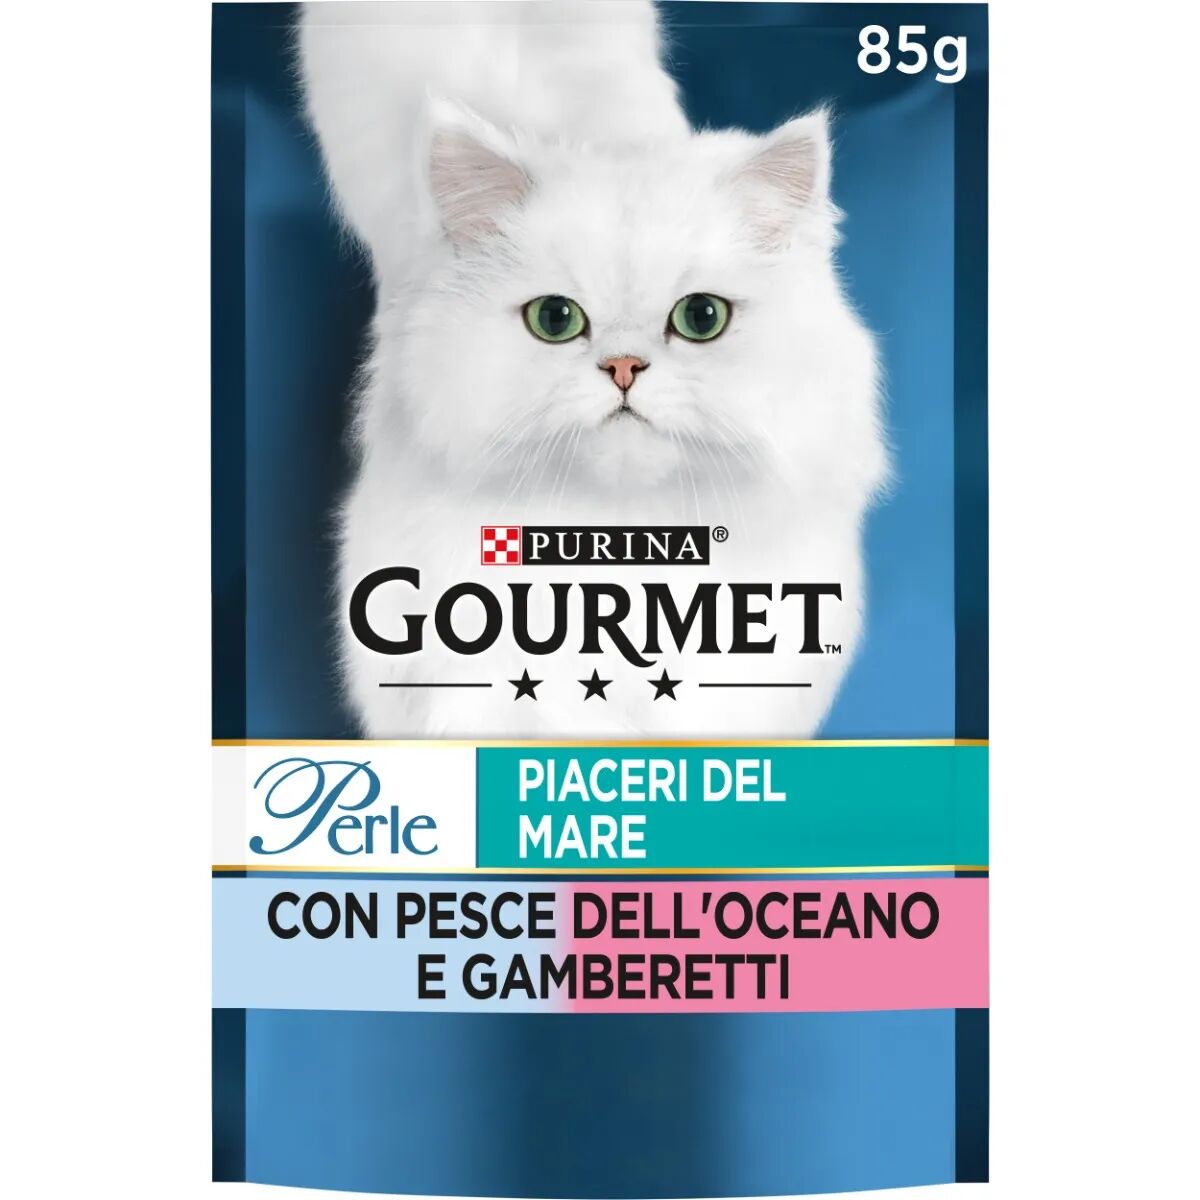 GOURMET Perle Piaceri del Mare Cat Busta Multipack 26x85G PESCE DELL'OCEANO E GAMBERETTI